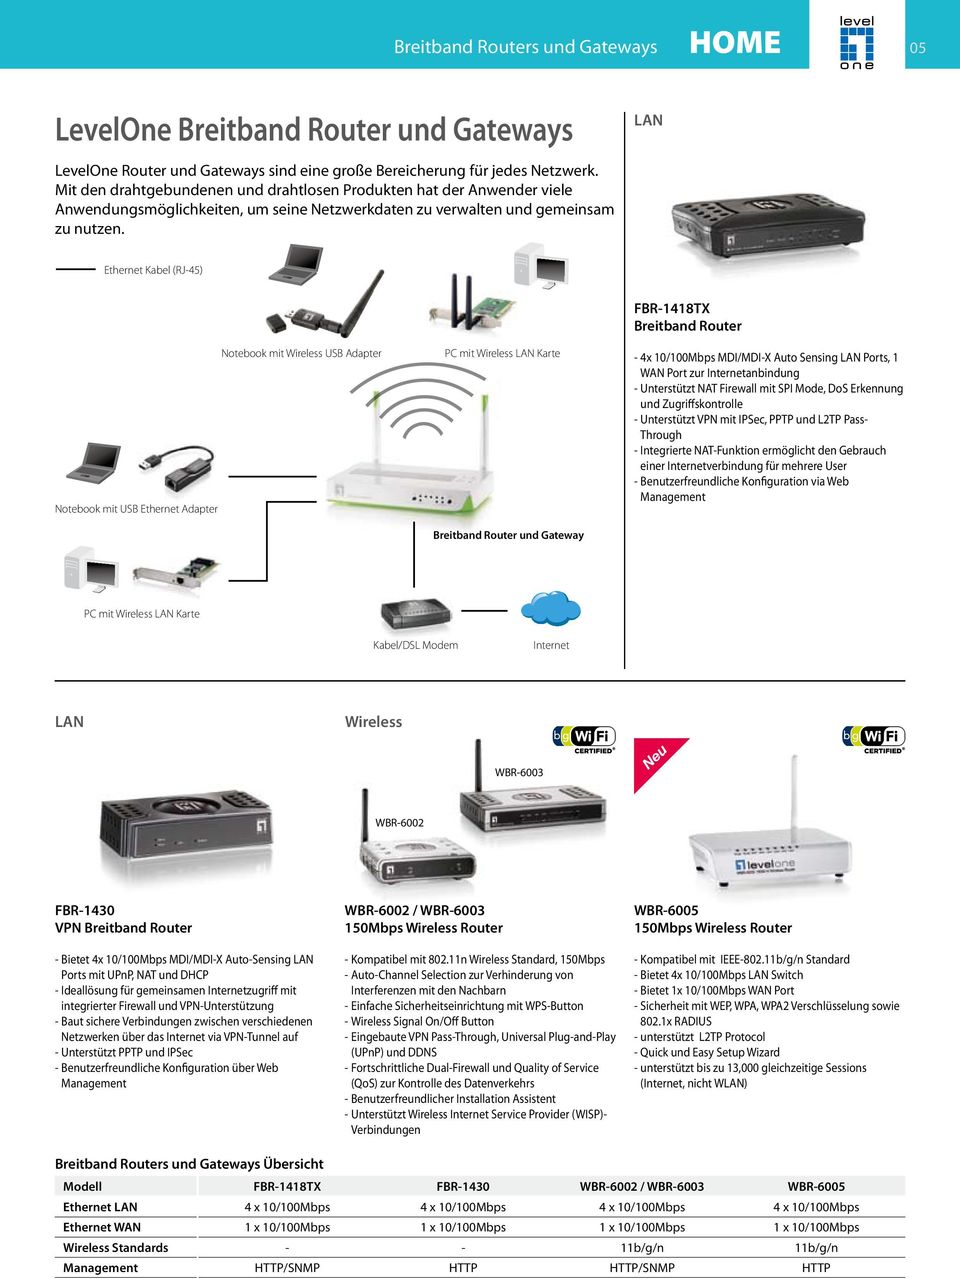 Ethernet Kabel (RJ-45) Notebook mit USB Ethernet Adapter Notebook mit Wireless USB Adapter PC mit Wireless LAN Karte Breitband Router und Gateway FBR-1418TX Breitband Router - 4x 10/100Mbps MDI/MDI-X